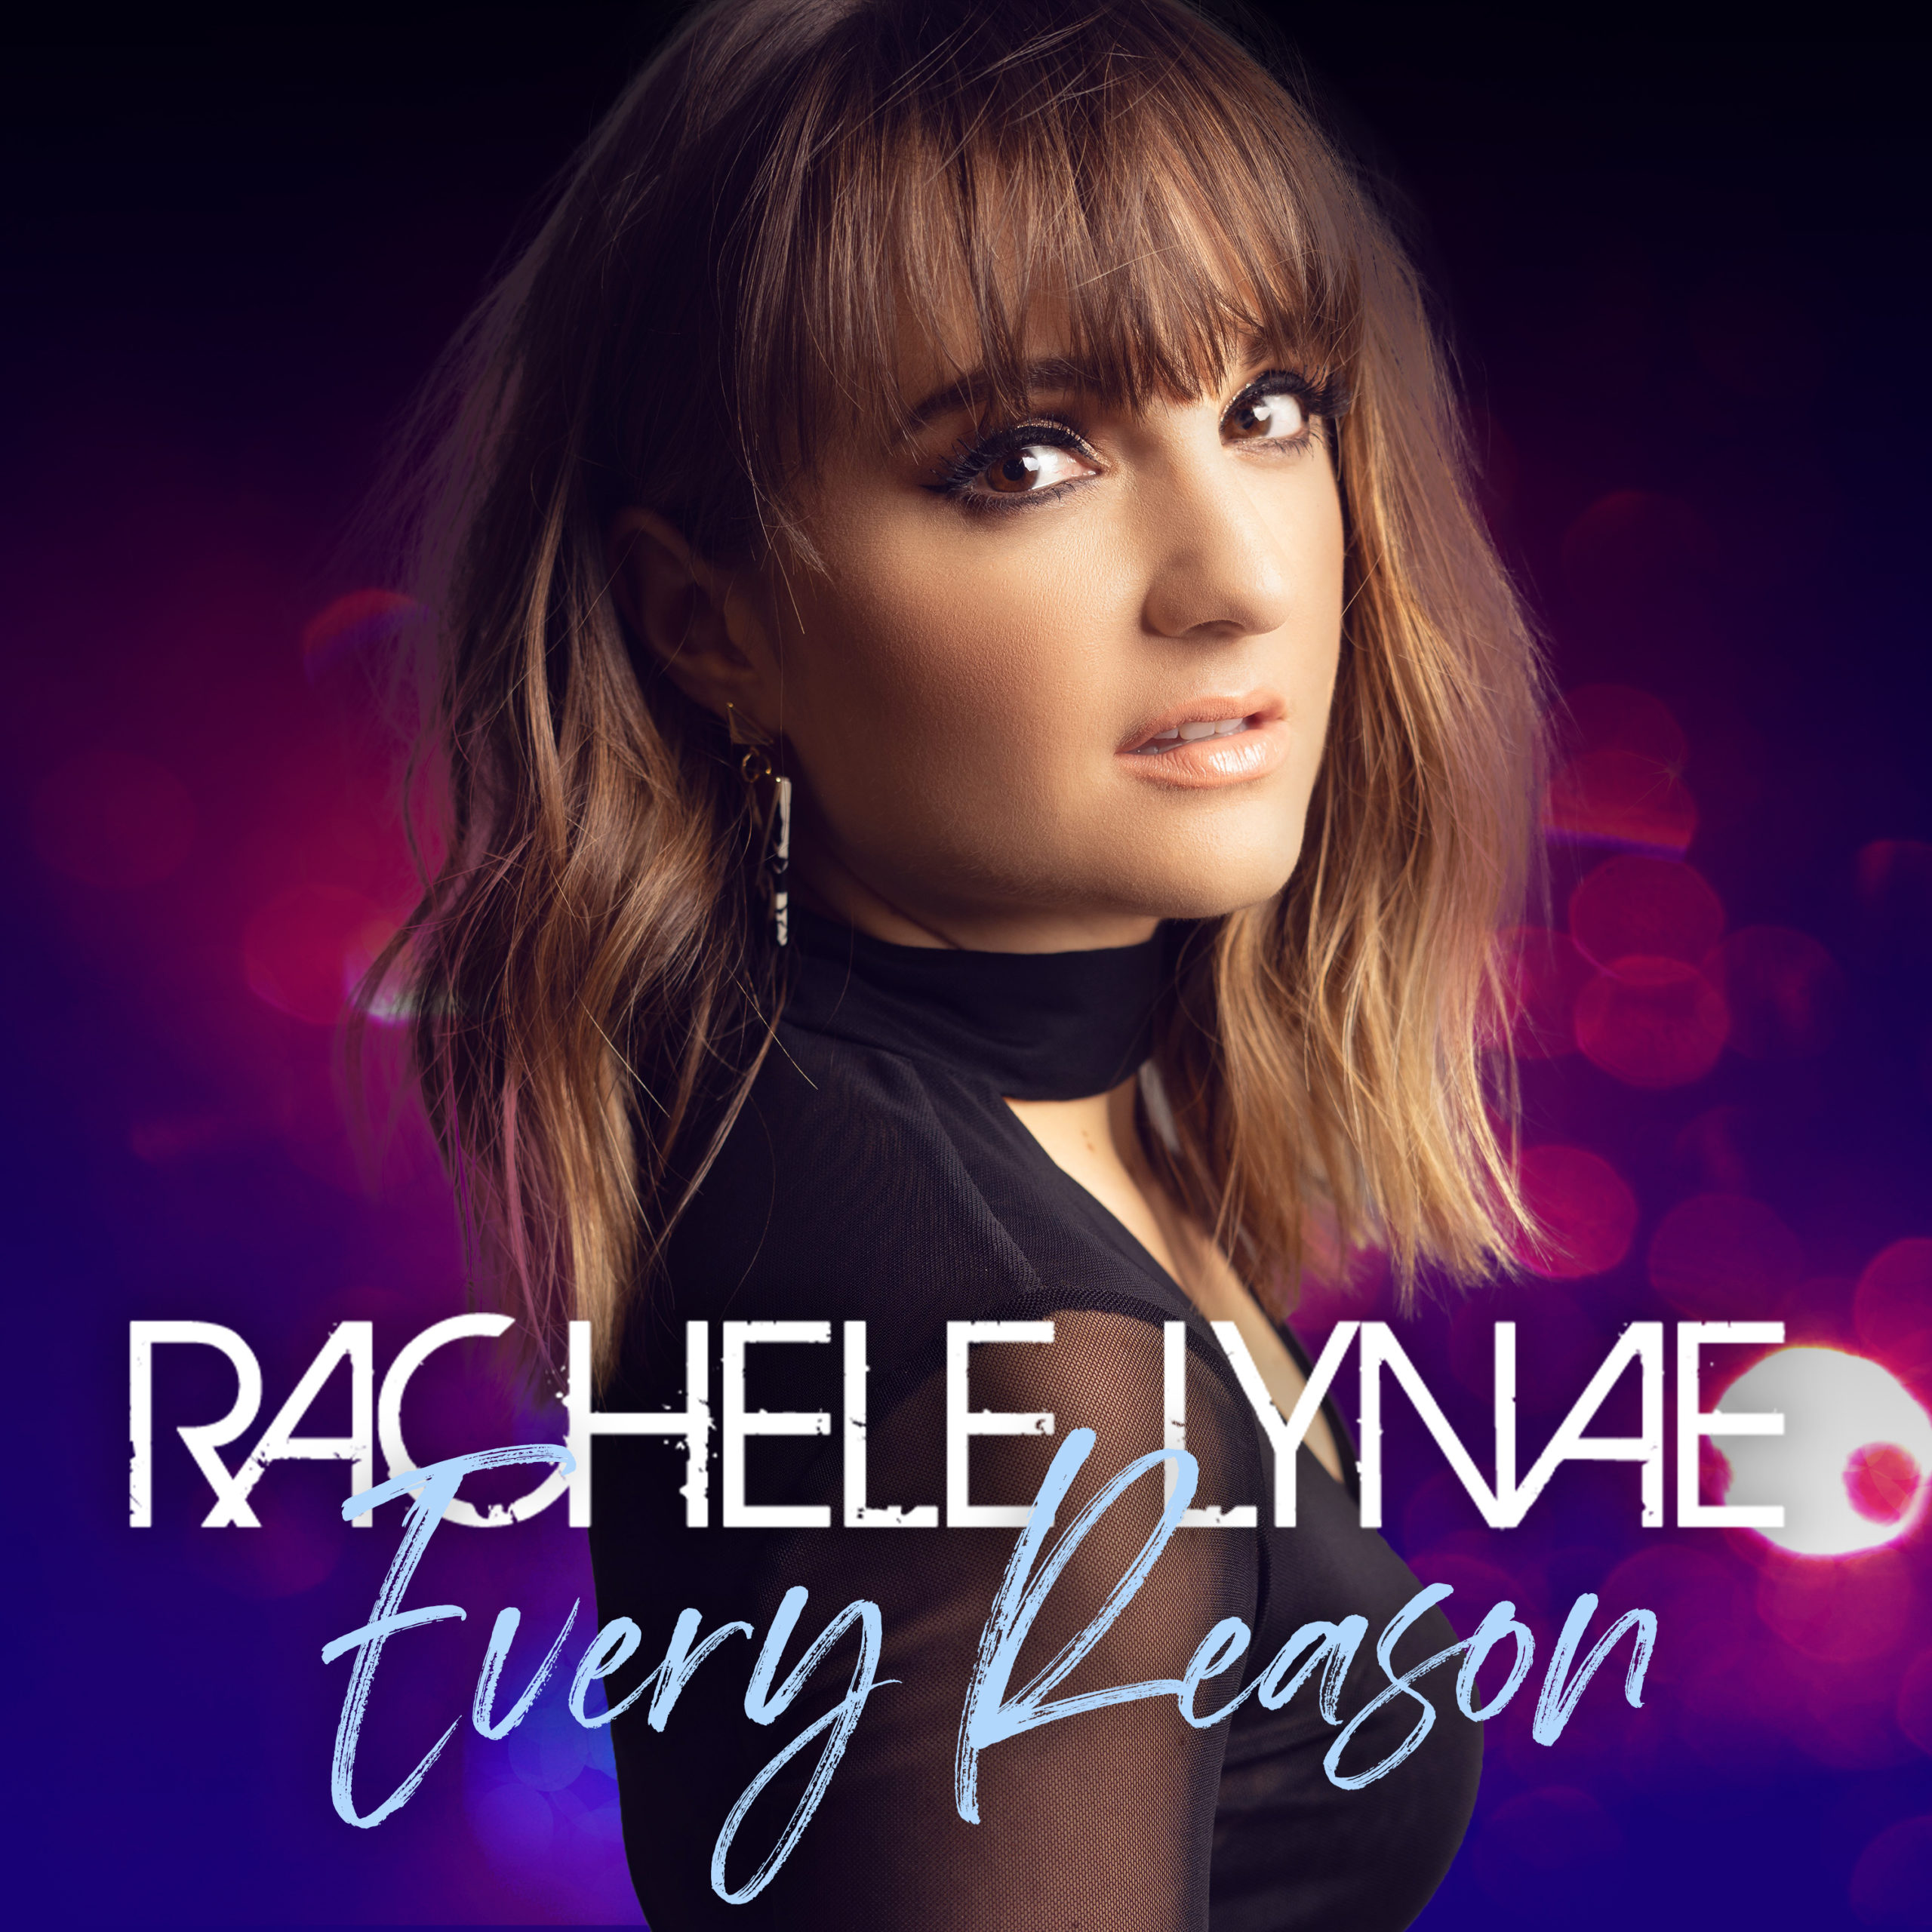 Rachele Lynae - "Every Reason"